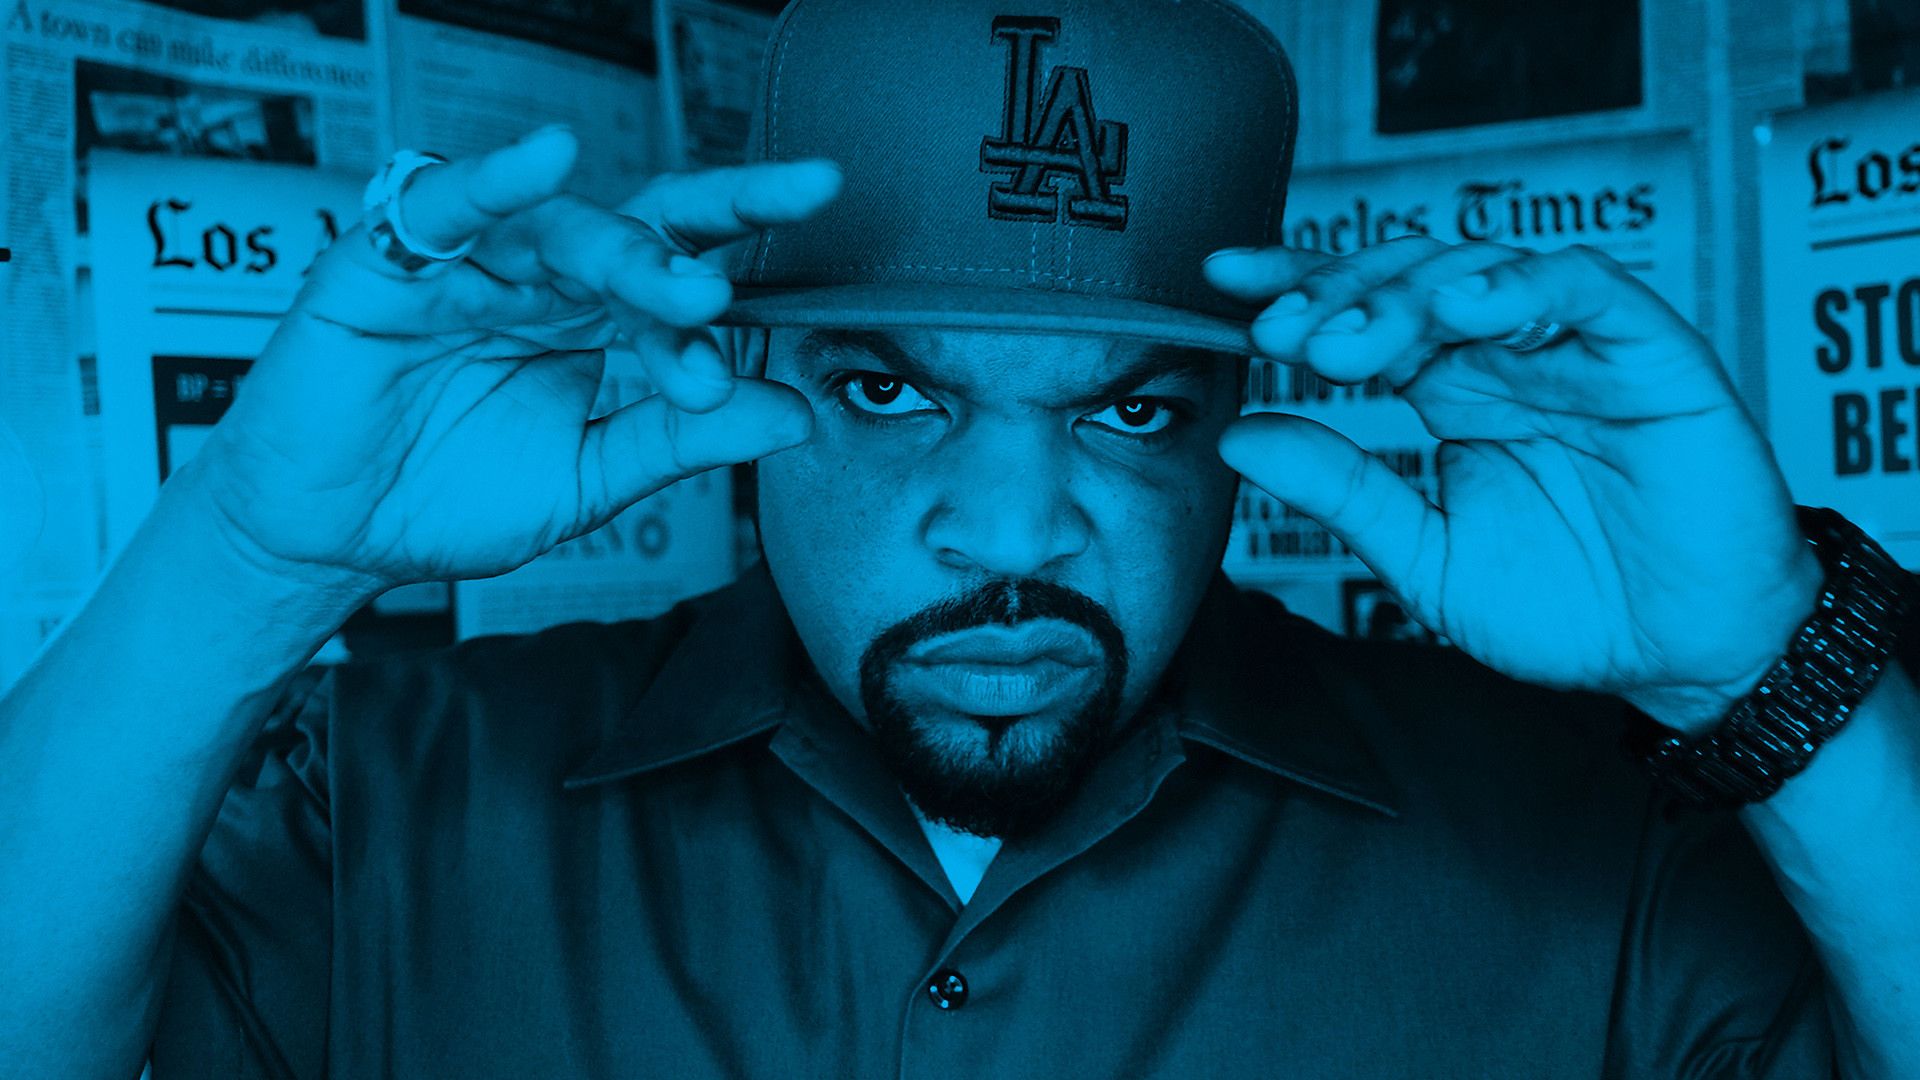 Ice cube me. Ice Cube 1989. Ice Cube Rapper. Ice Cube 2022. Ice Cube n.w.a.